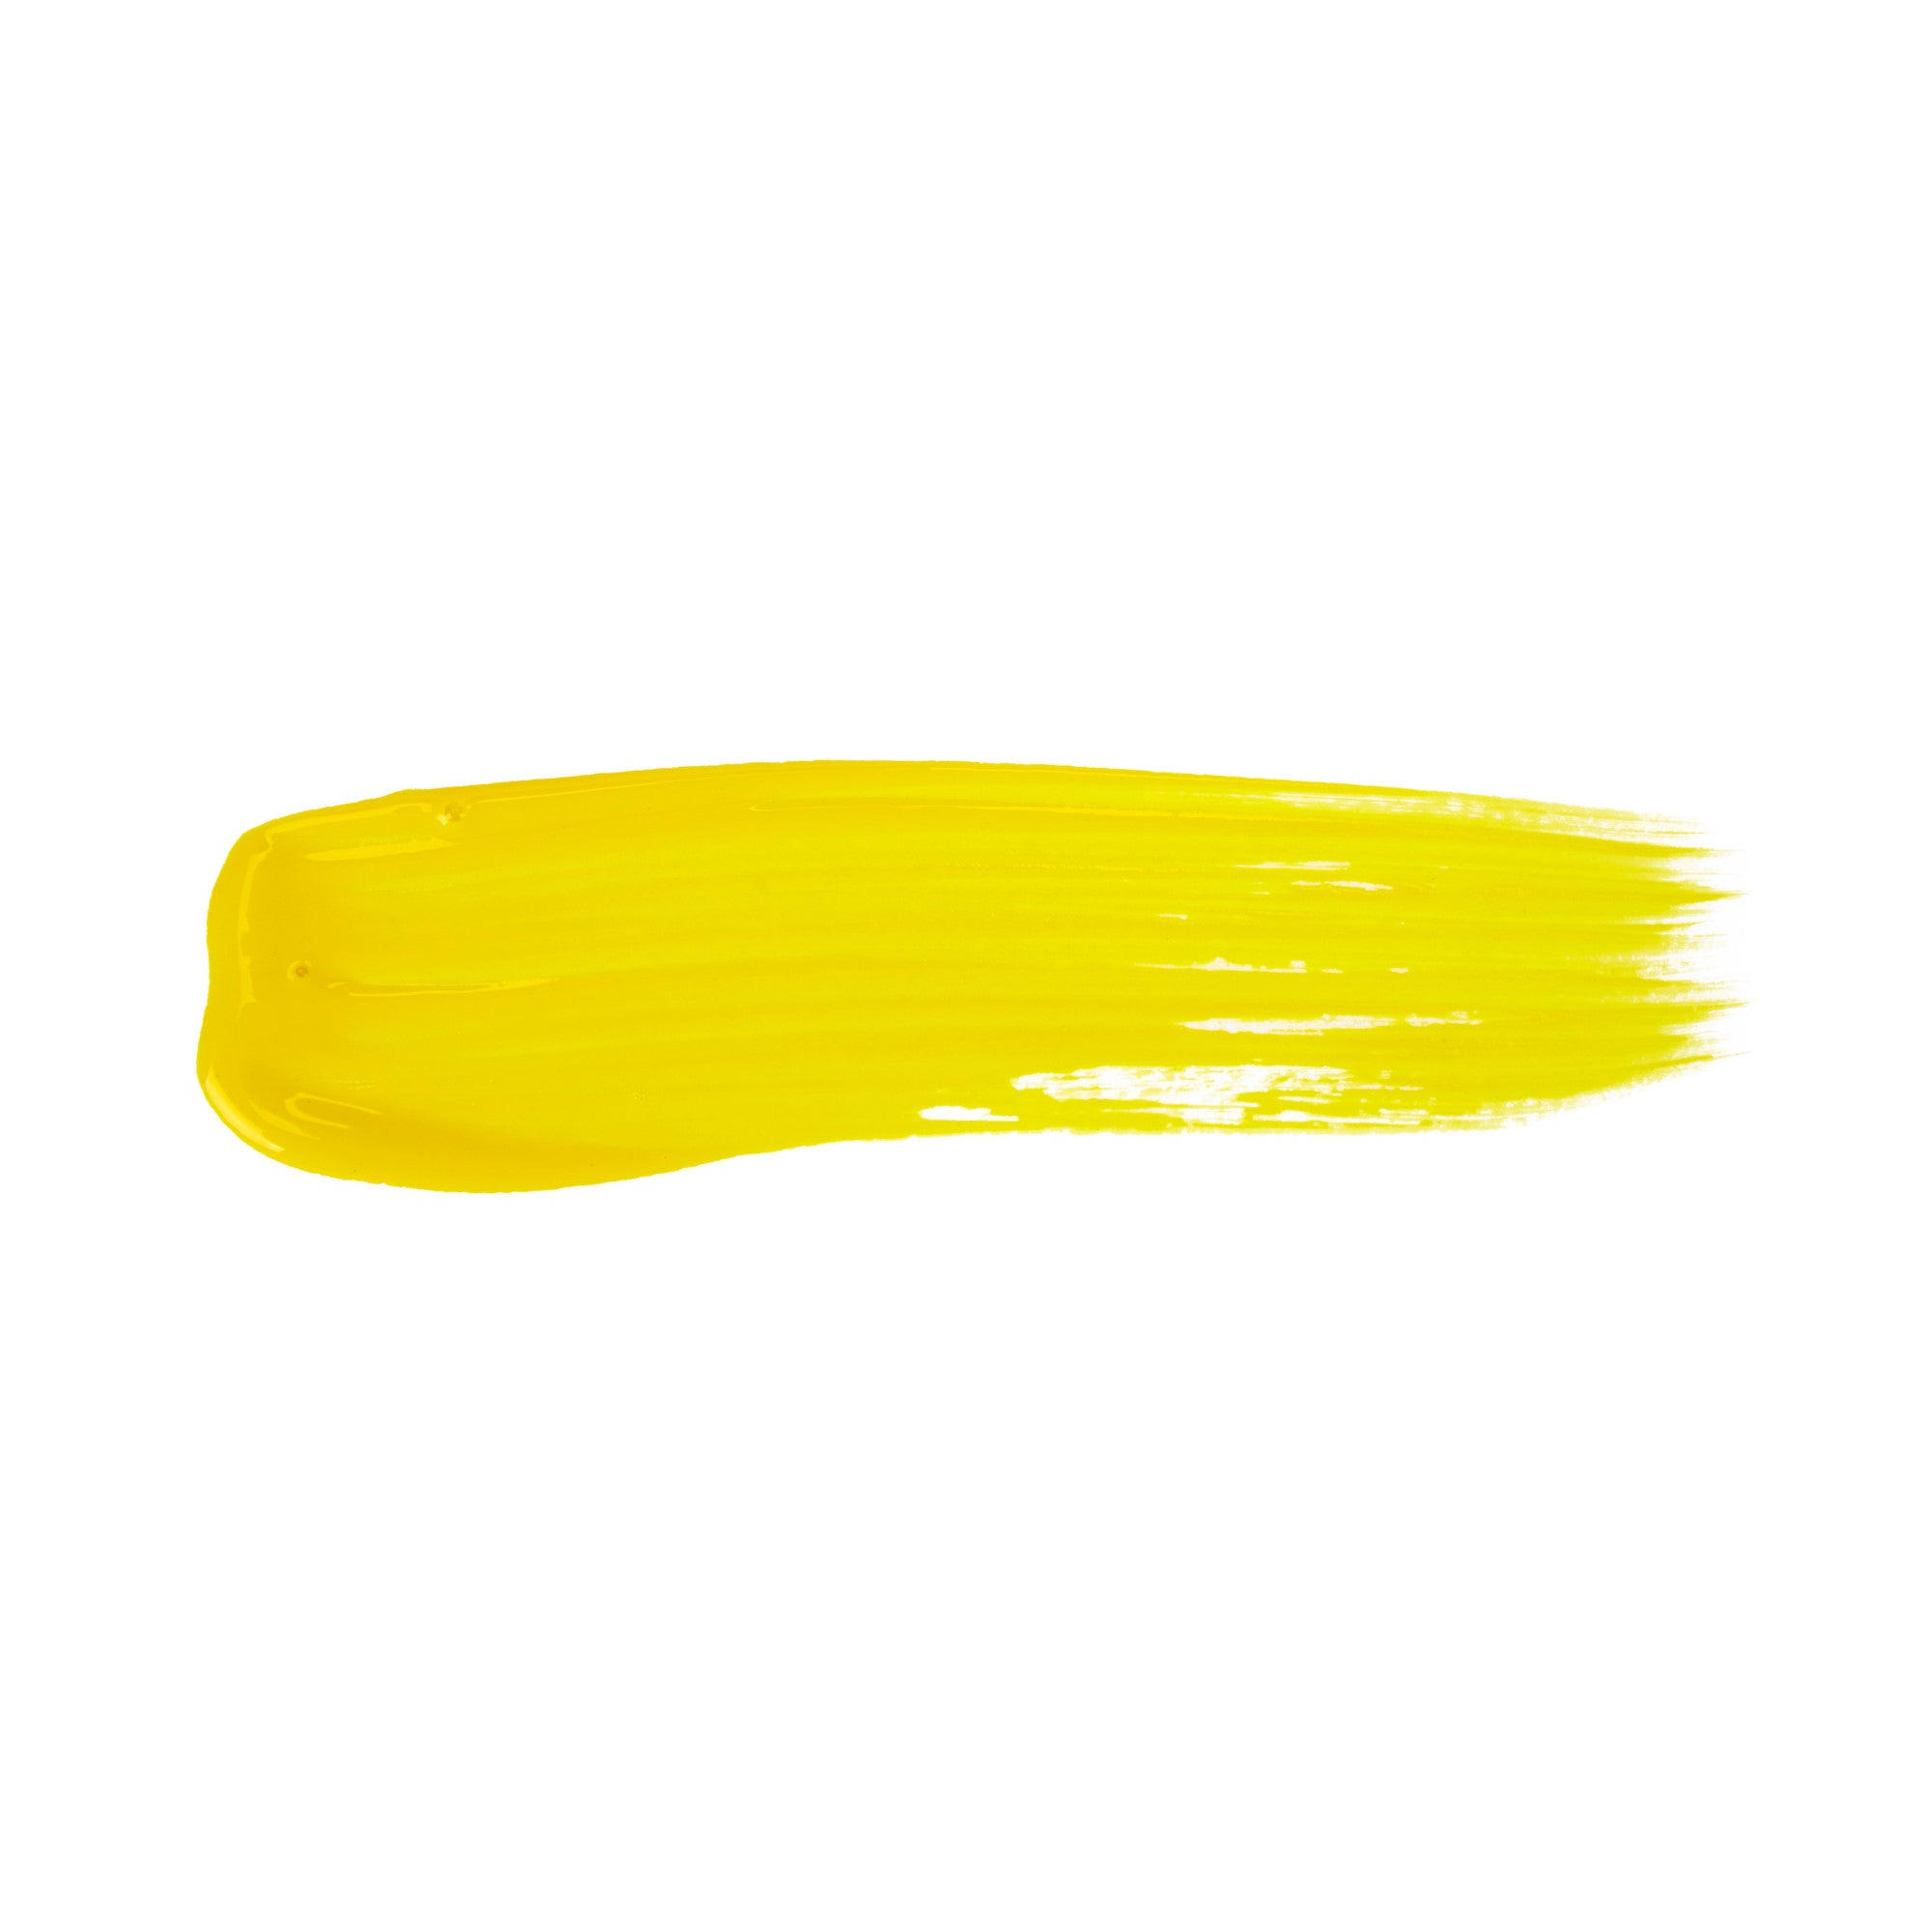 Crayola Washable Tempera Paint 946 ml, Yellow